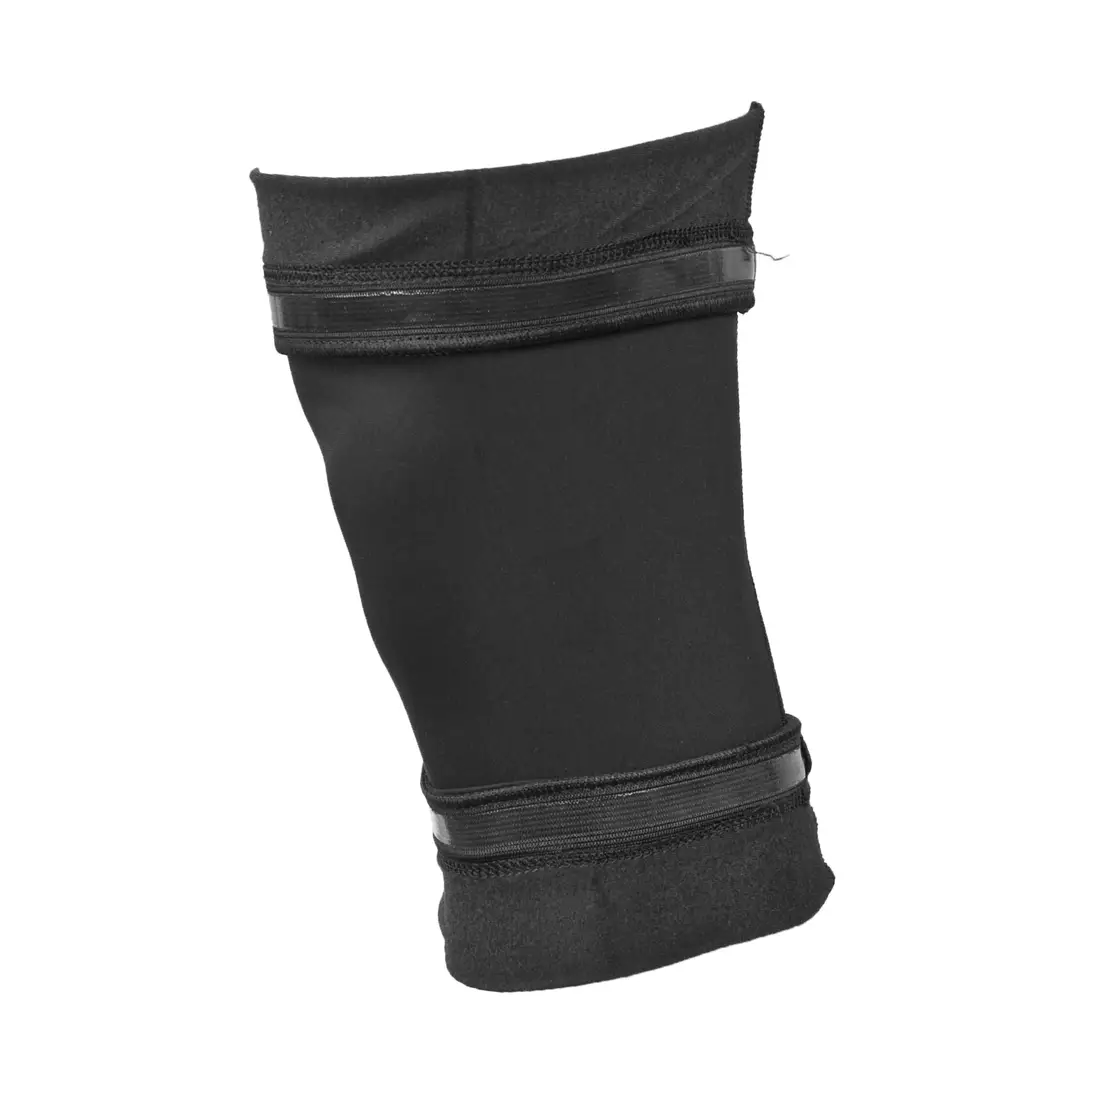 MikeSPORT SUPERROUBAIX insulated knee pads